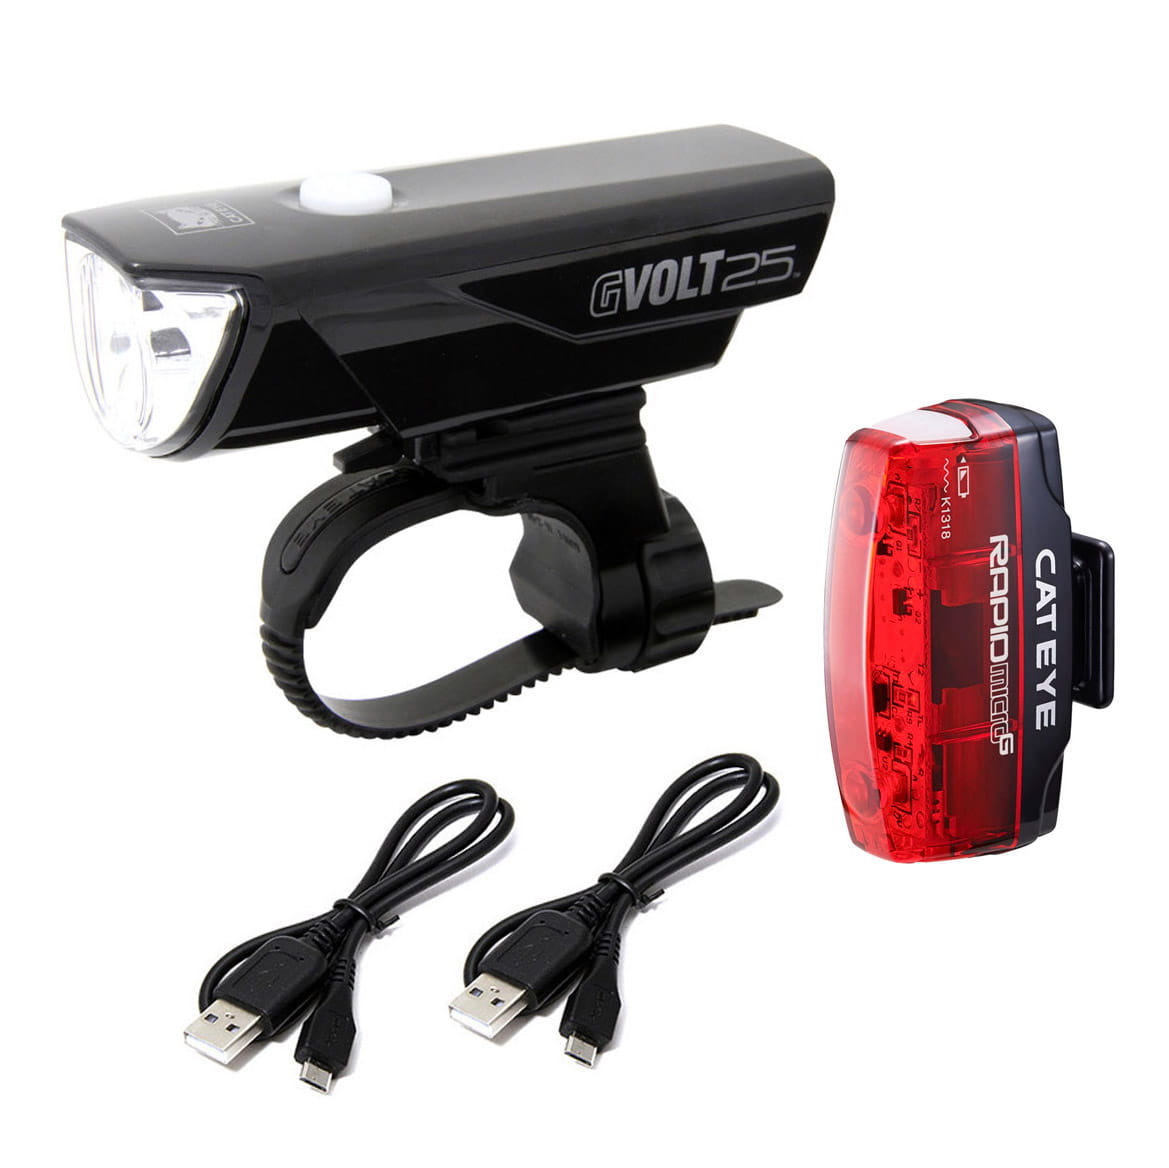 Cateye Gvolt 25 LED Bike Light Set with Rear Light Rapid Micro G